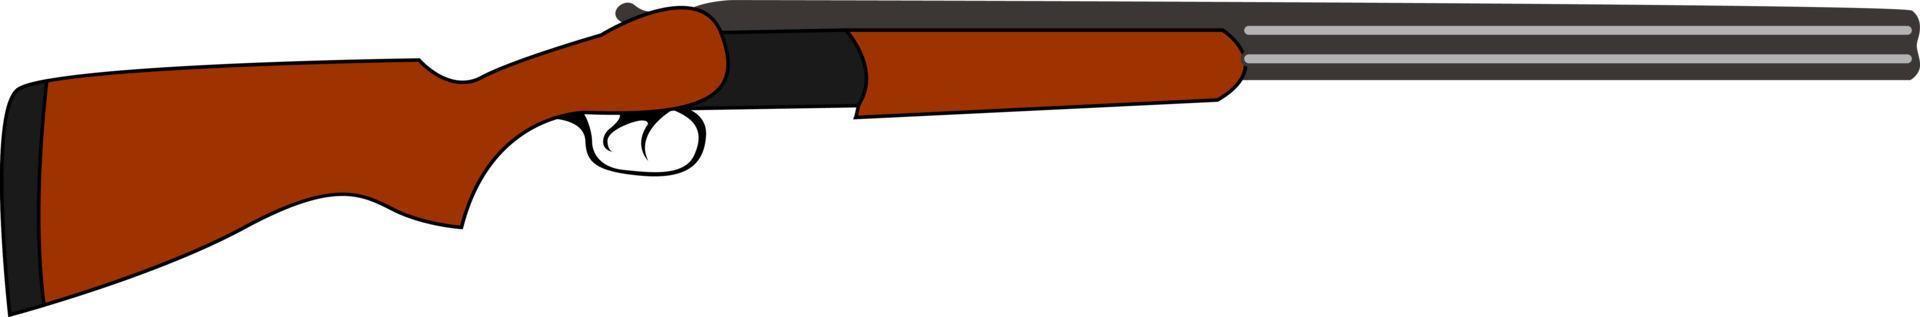 Arma de escopeta, ilustración, vector sobre fondo blanco.